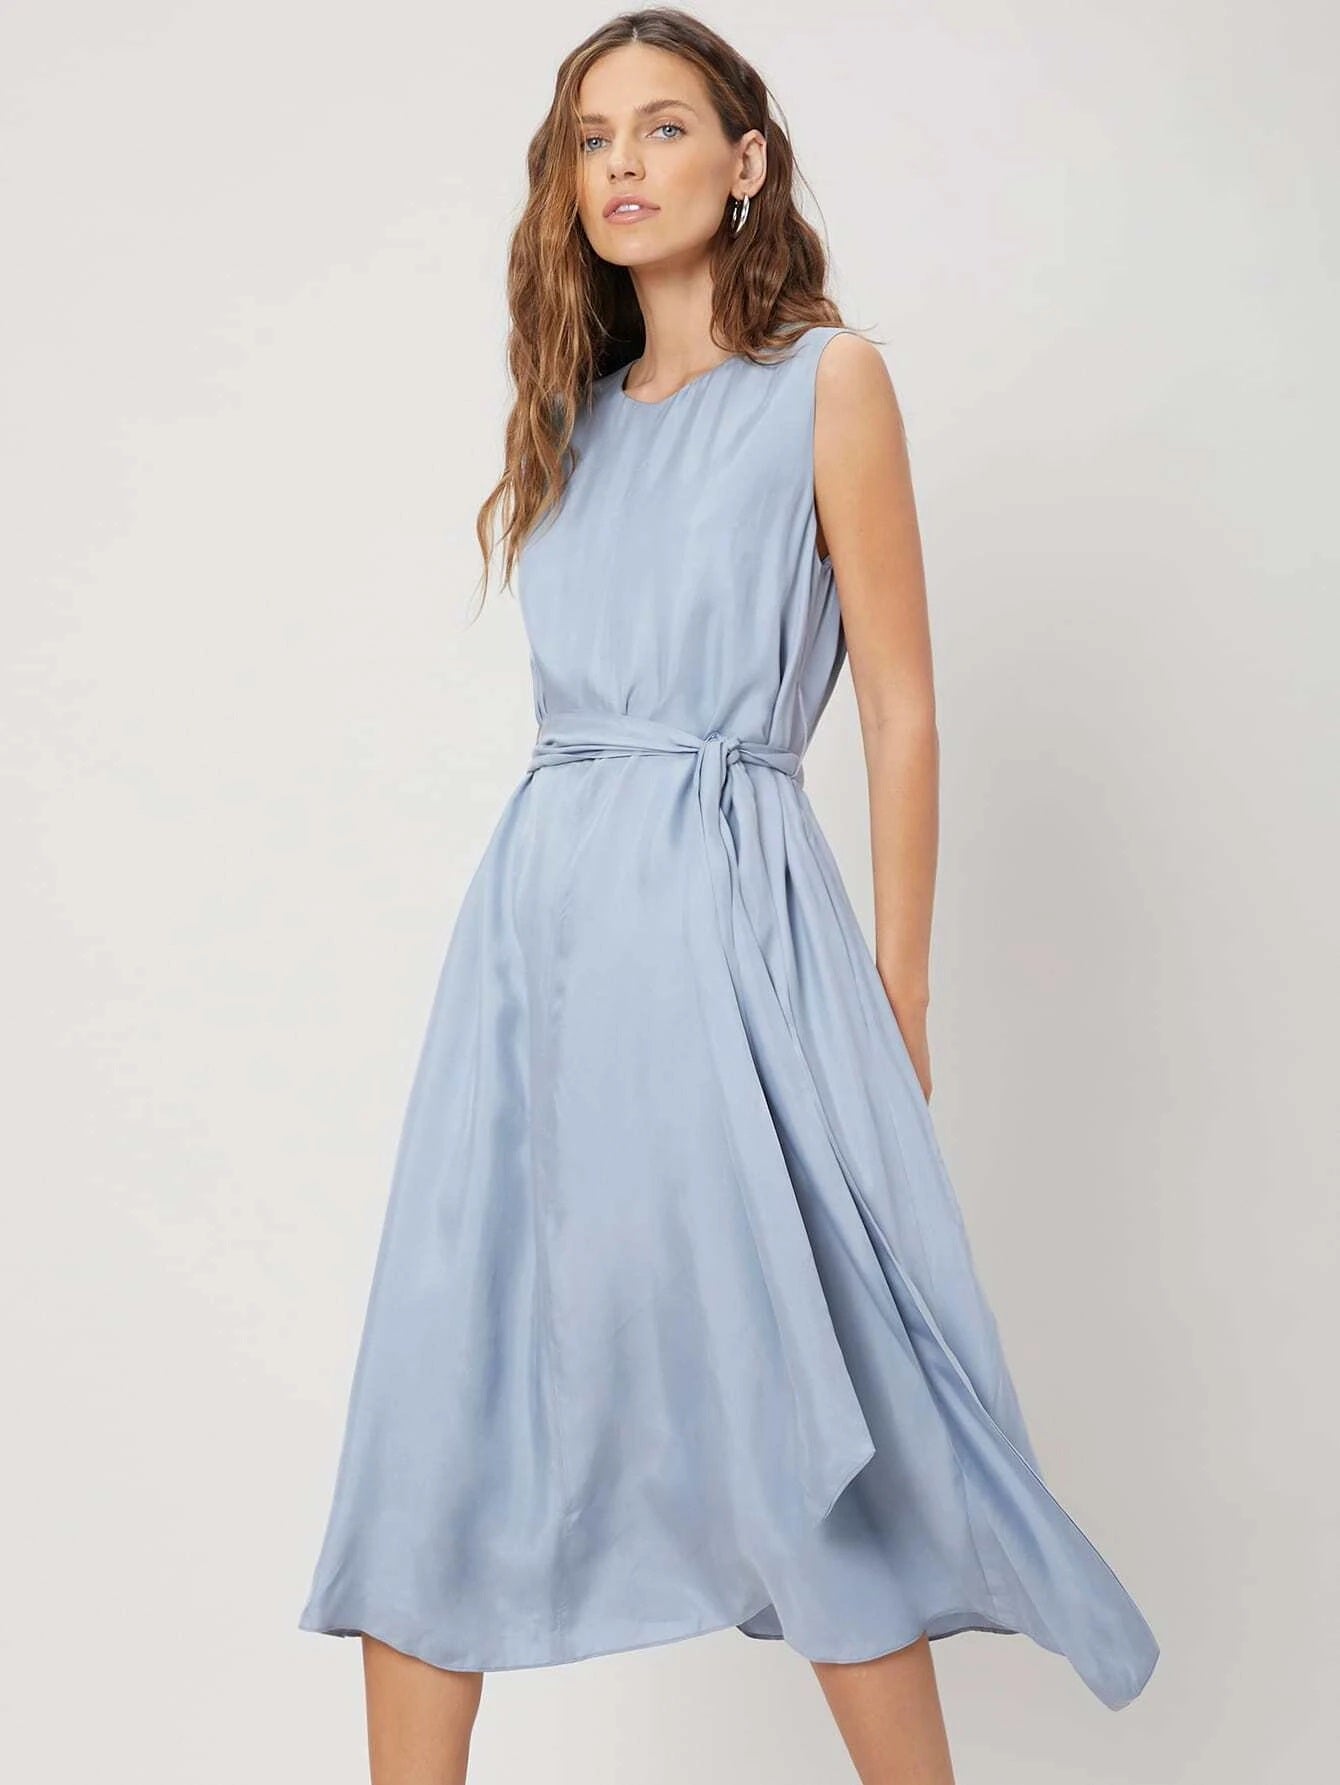 CM-ES414096 Women Elegant Seoul Style Round Neck Sleeveless Flowy Belted Dress - Baby Blue